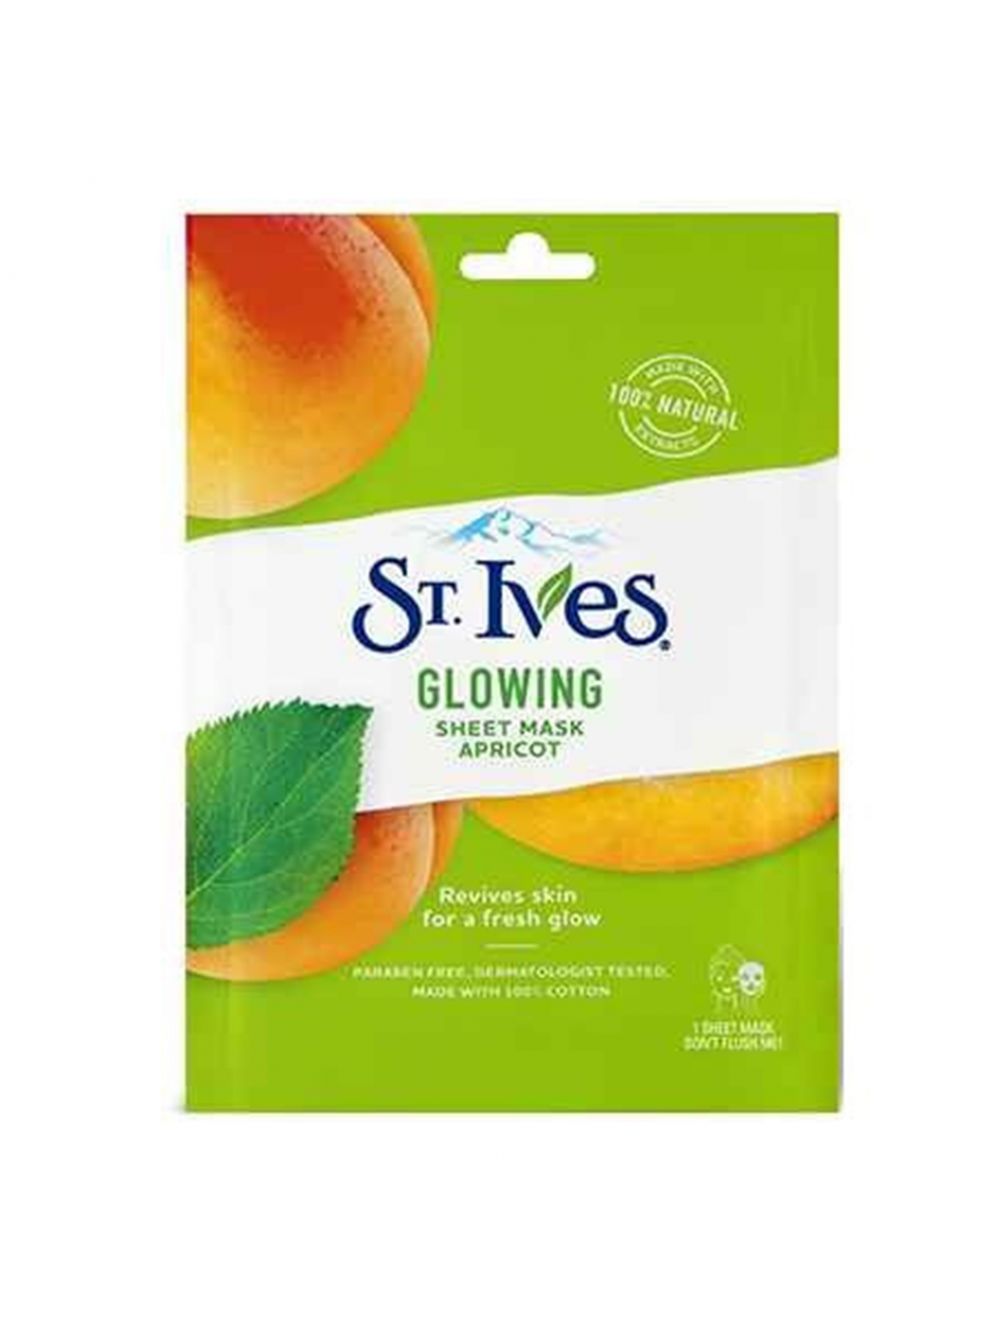 St. Ives Glowing Apricot Sheet Mask (1Pc)